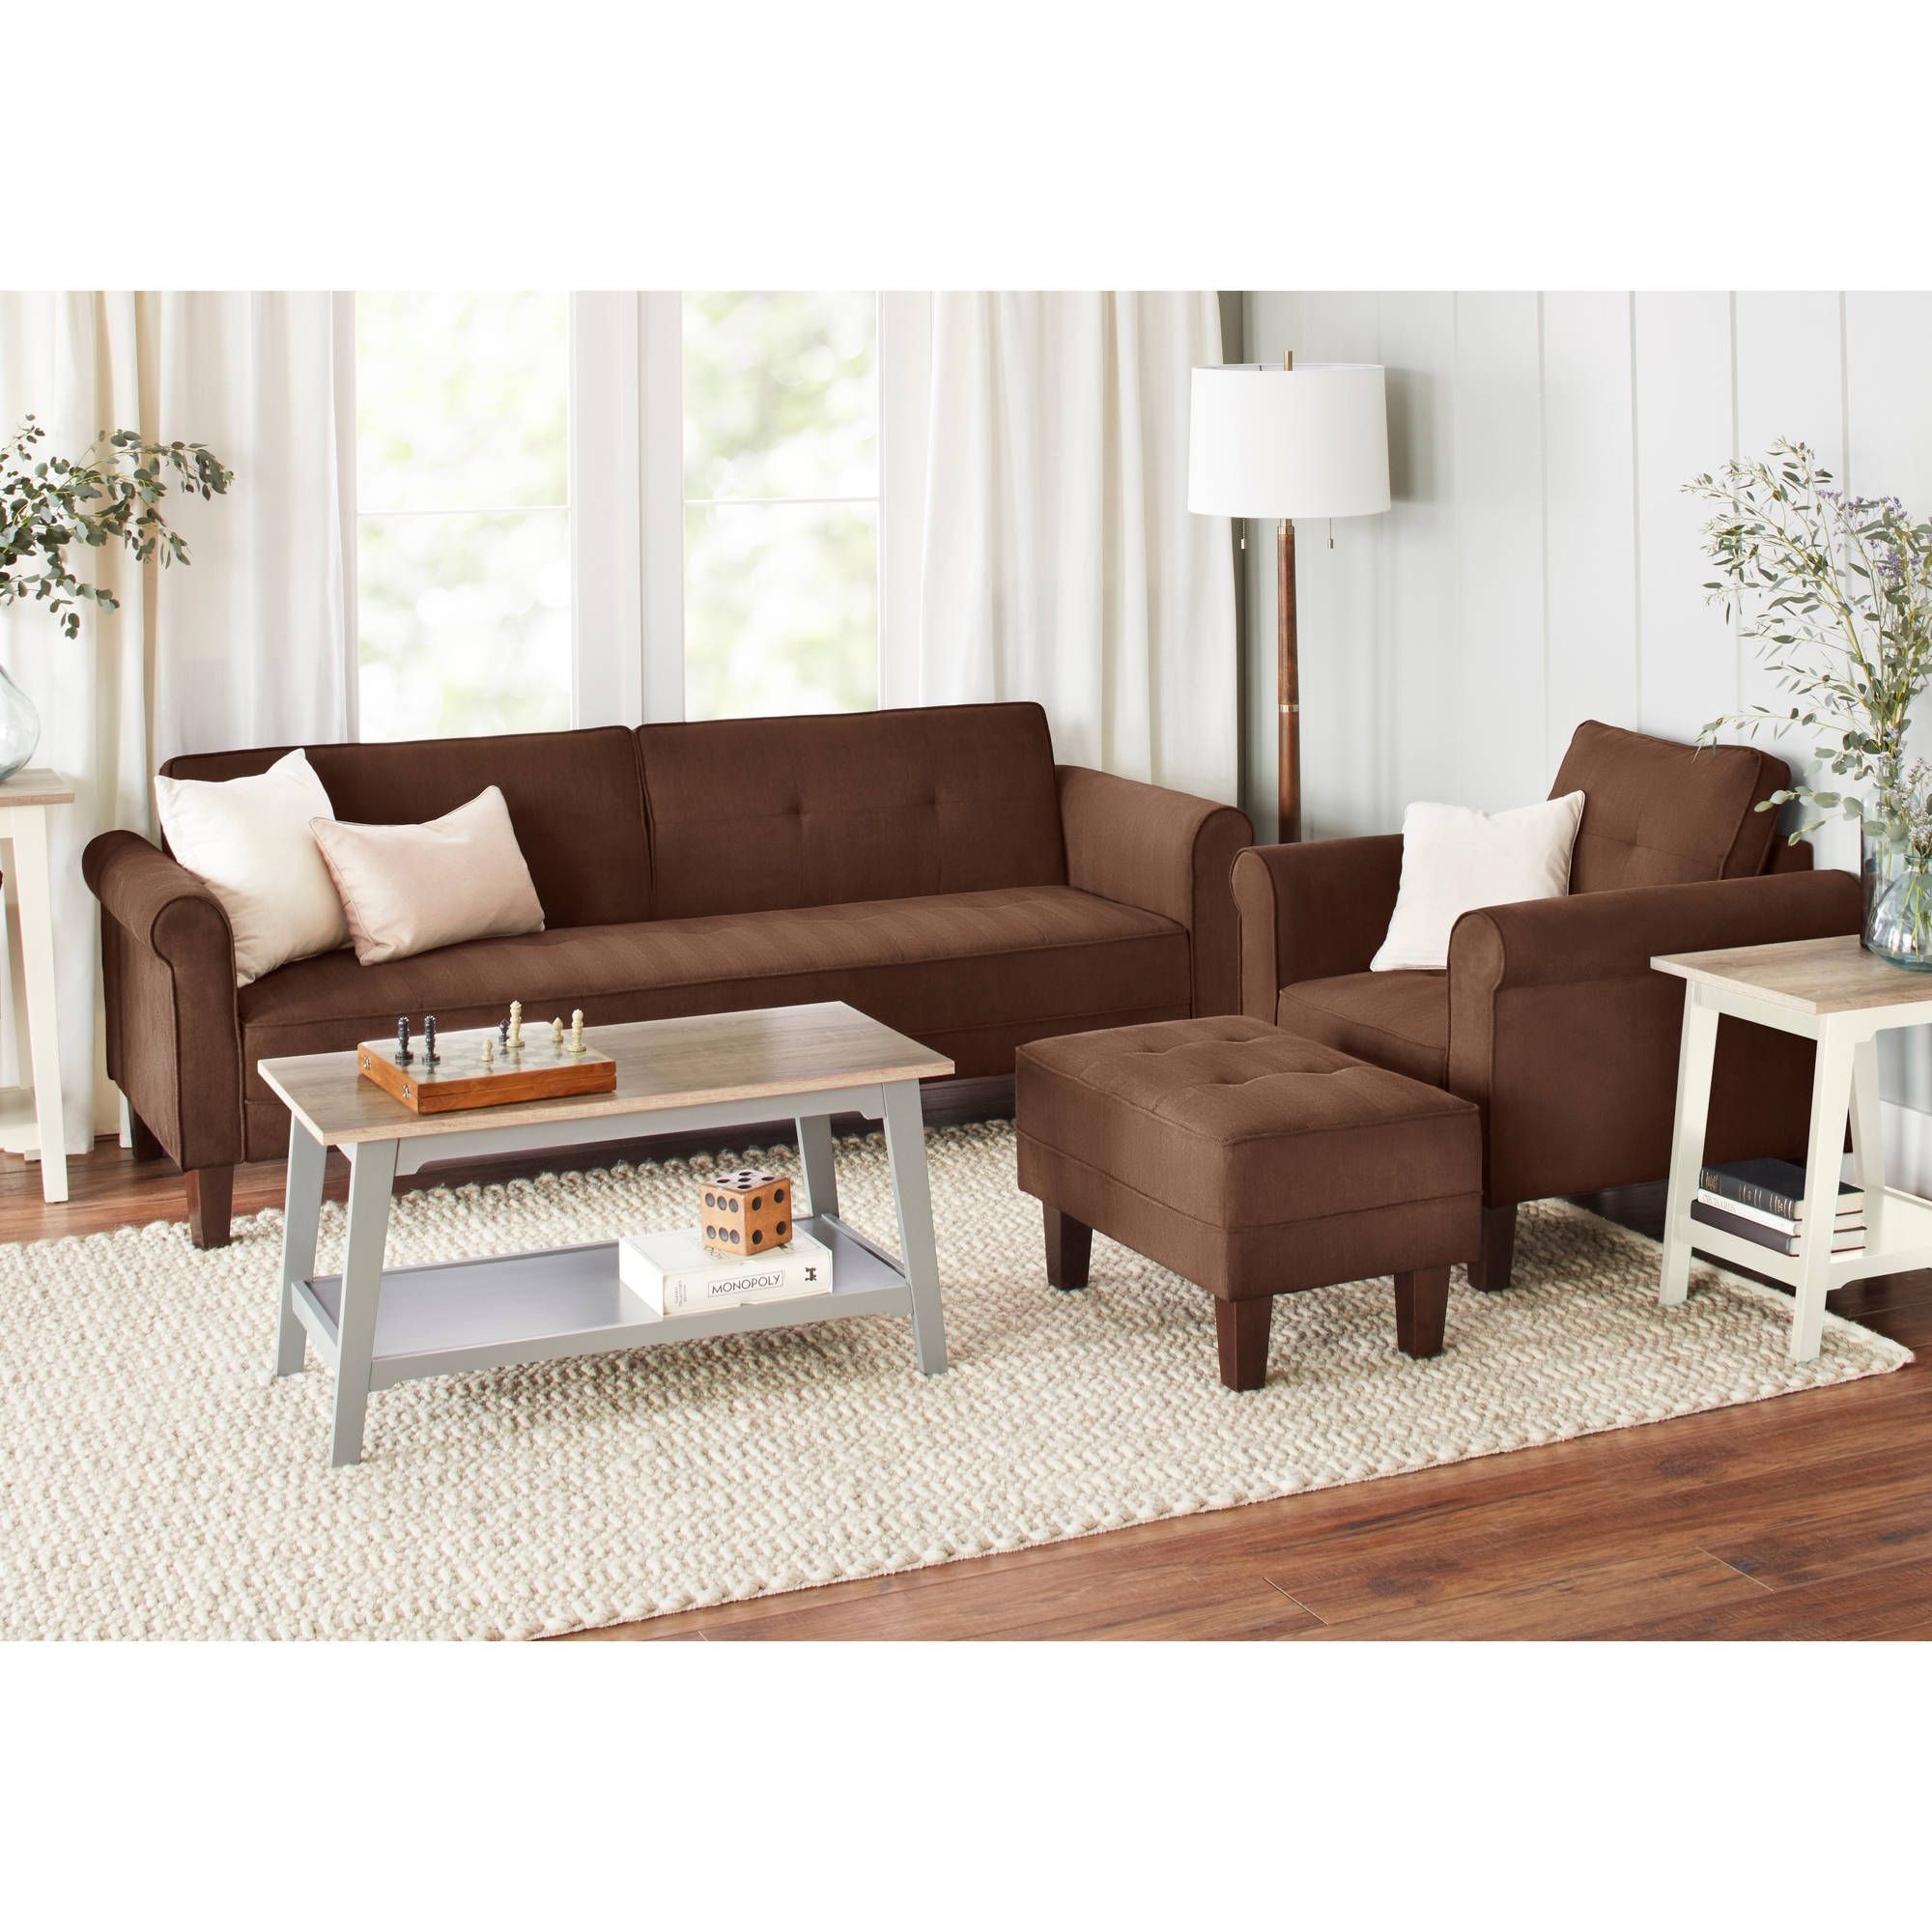 Furniture : Living Room Sofa Set Designs 2015 Living Room Sets With Regard To Kansas City Mo Sectional Sofas (Photo 2 of 10)